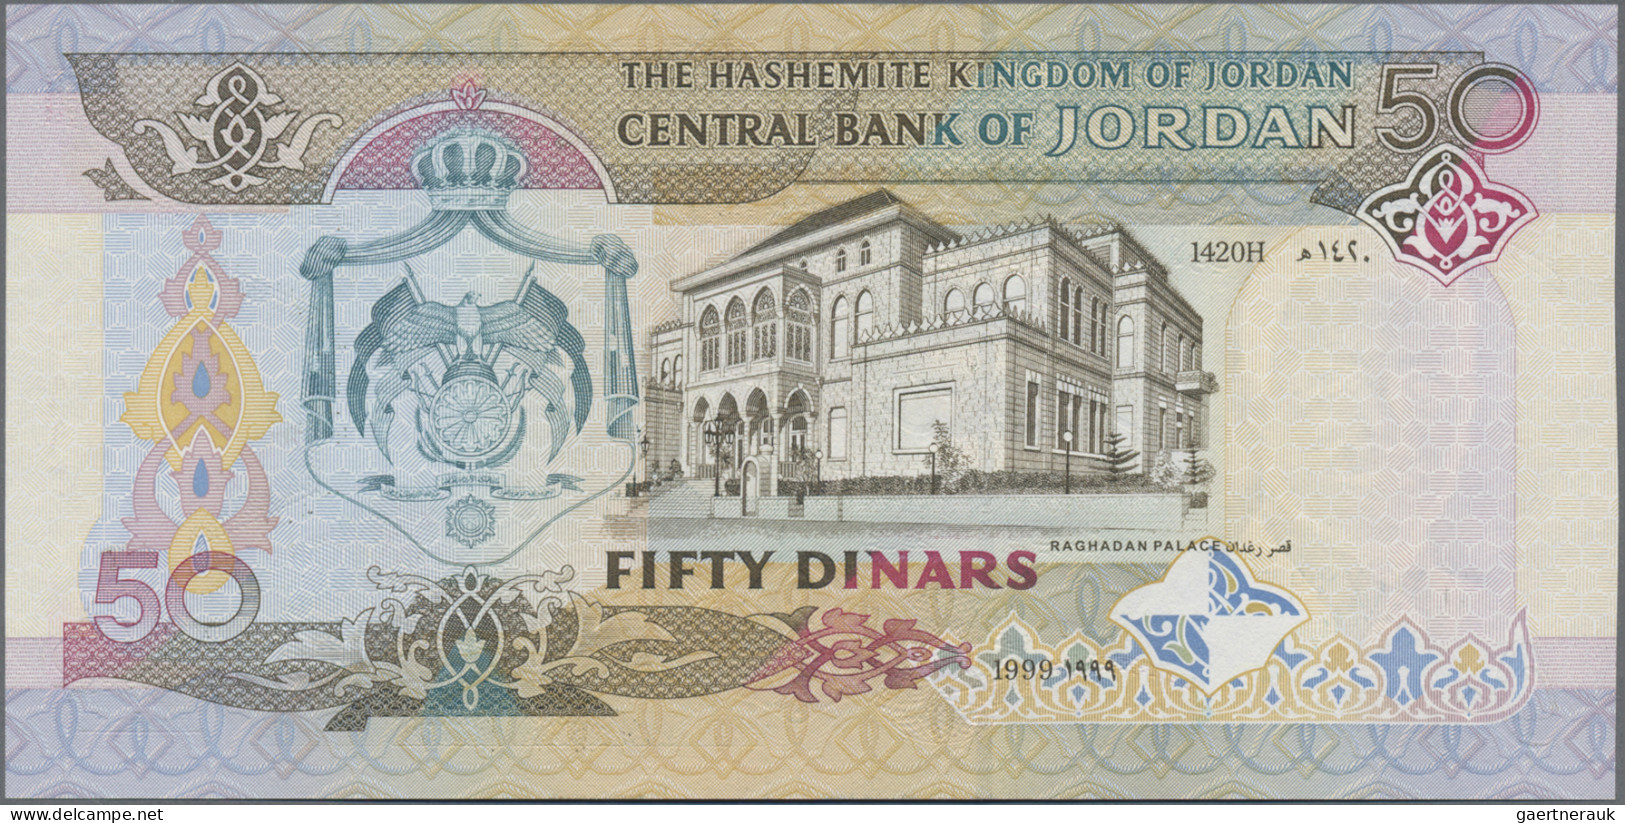 Jordan: Central Bank Of Jordan, 50 Dinars 1999, P.33 In UNC Condition. - Jordanien